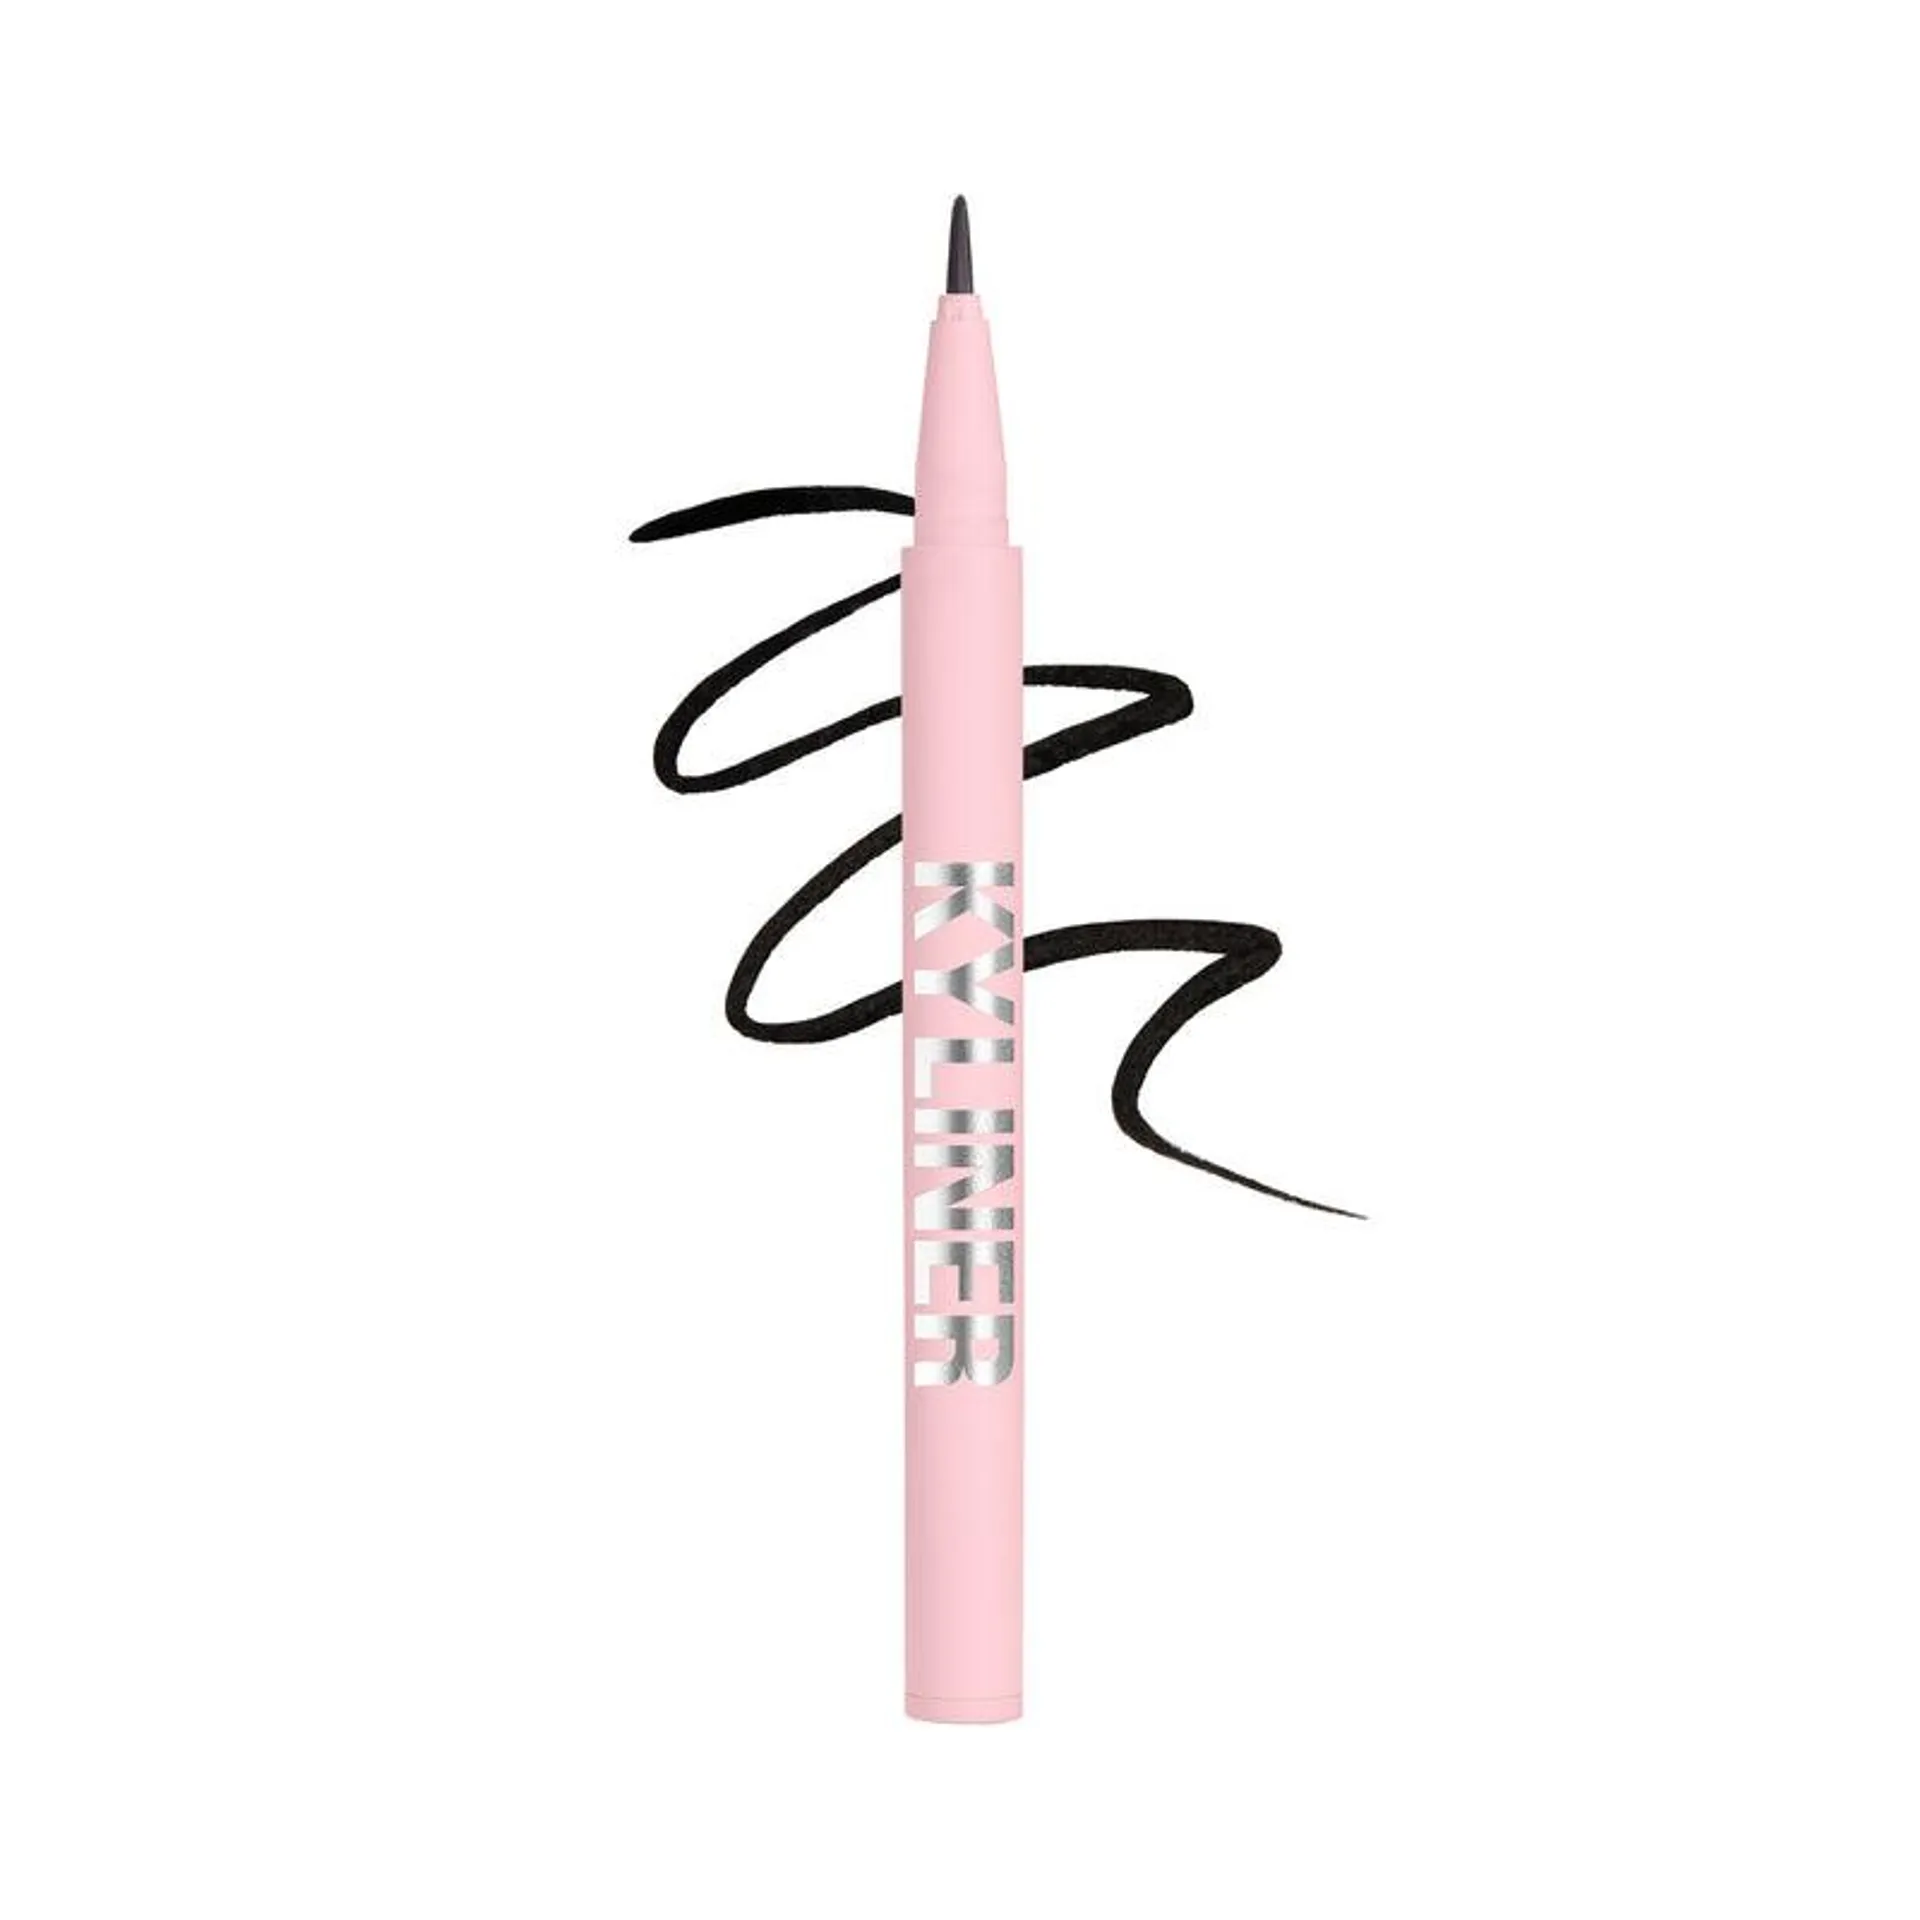 Kyliner Brush Tip Liquid Eyeliner Pen